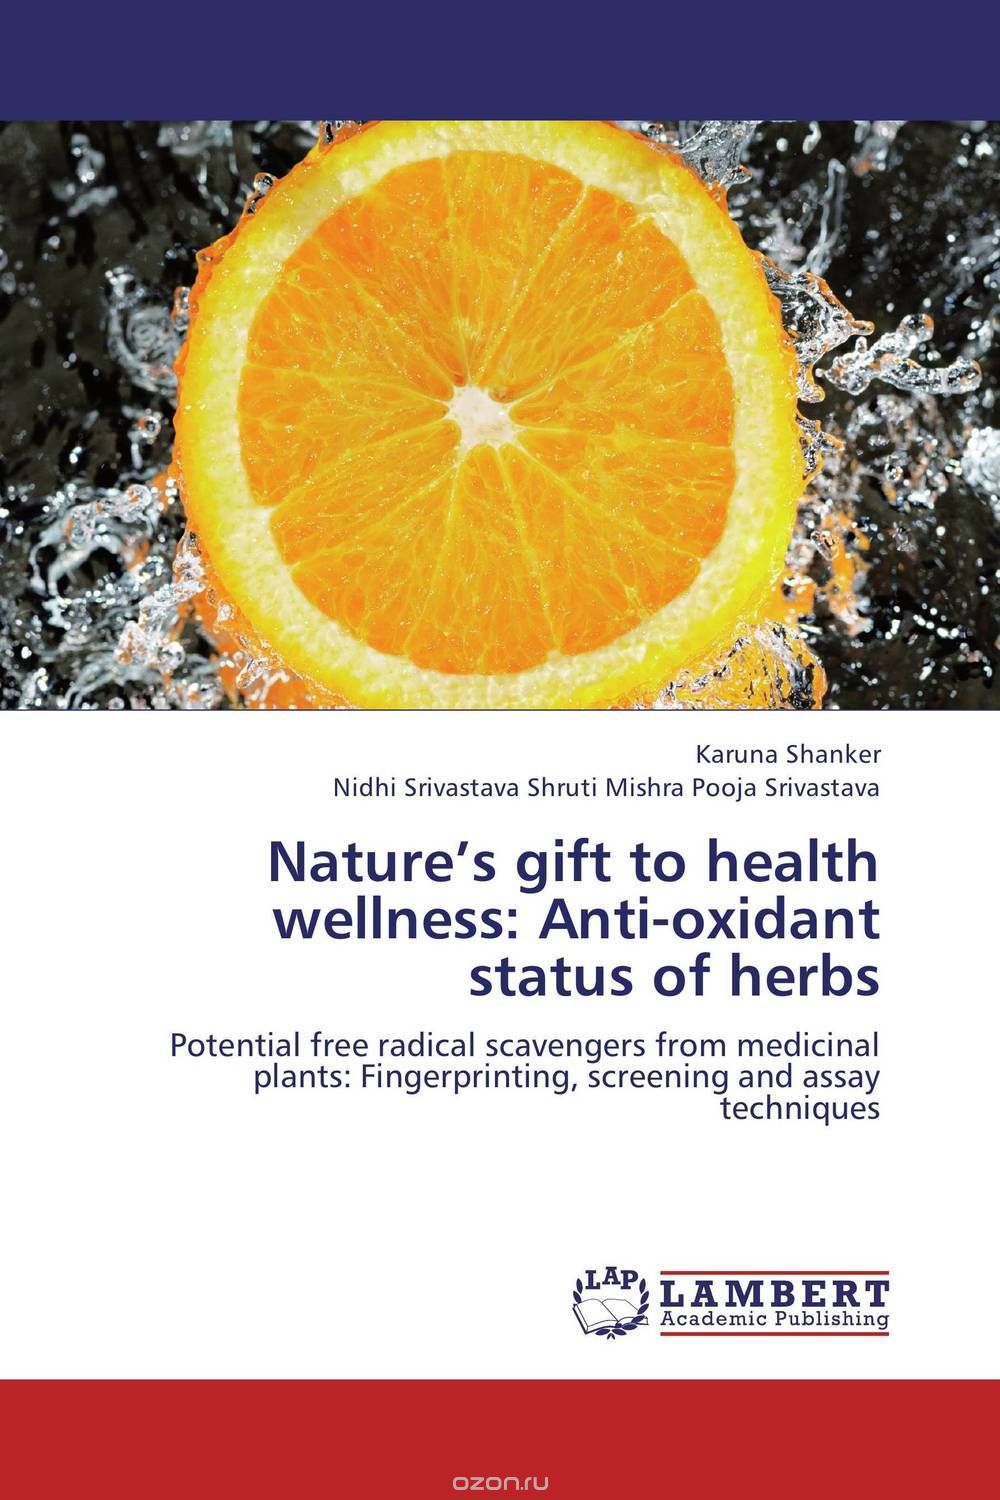 Скачать книгу "Nature’s gift to health wellness: Anti-oxidant status of herbs"